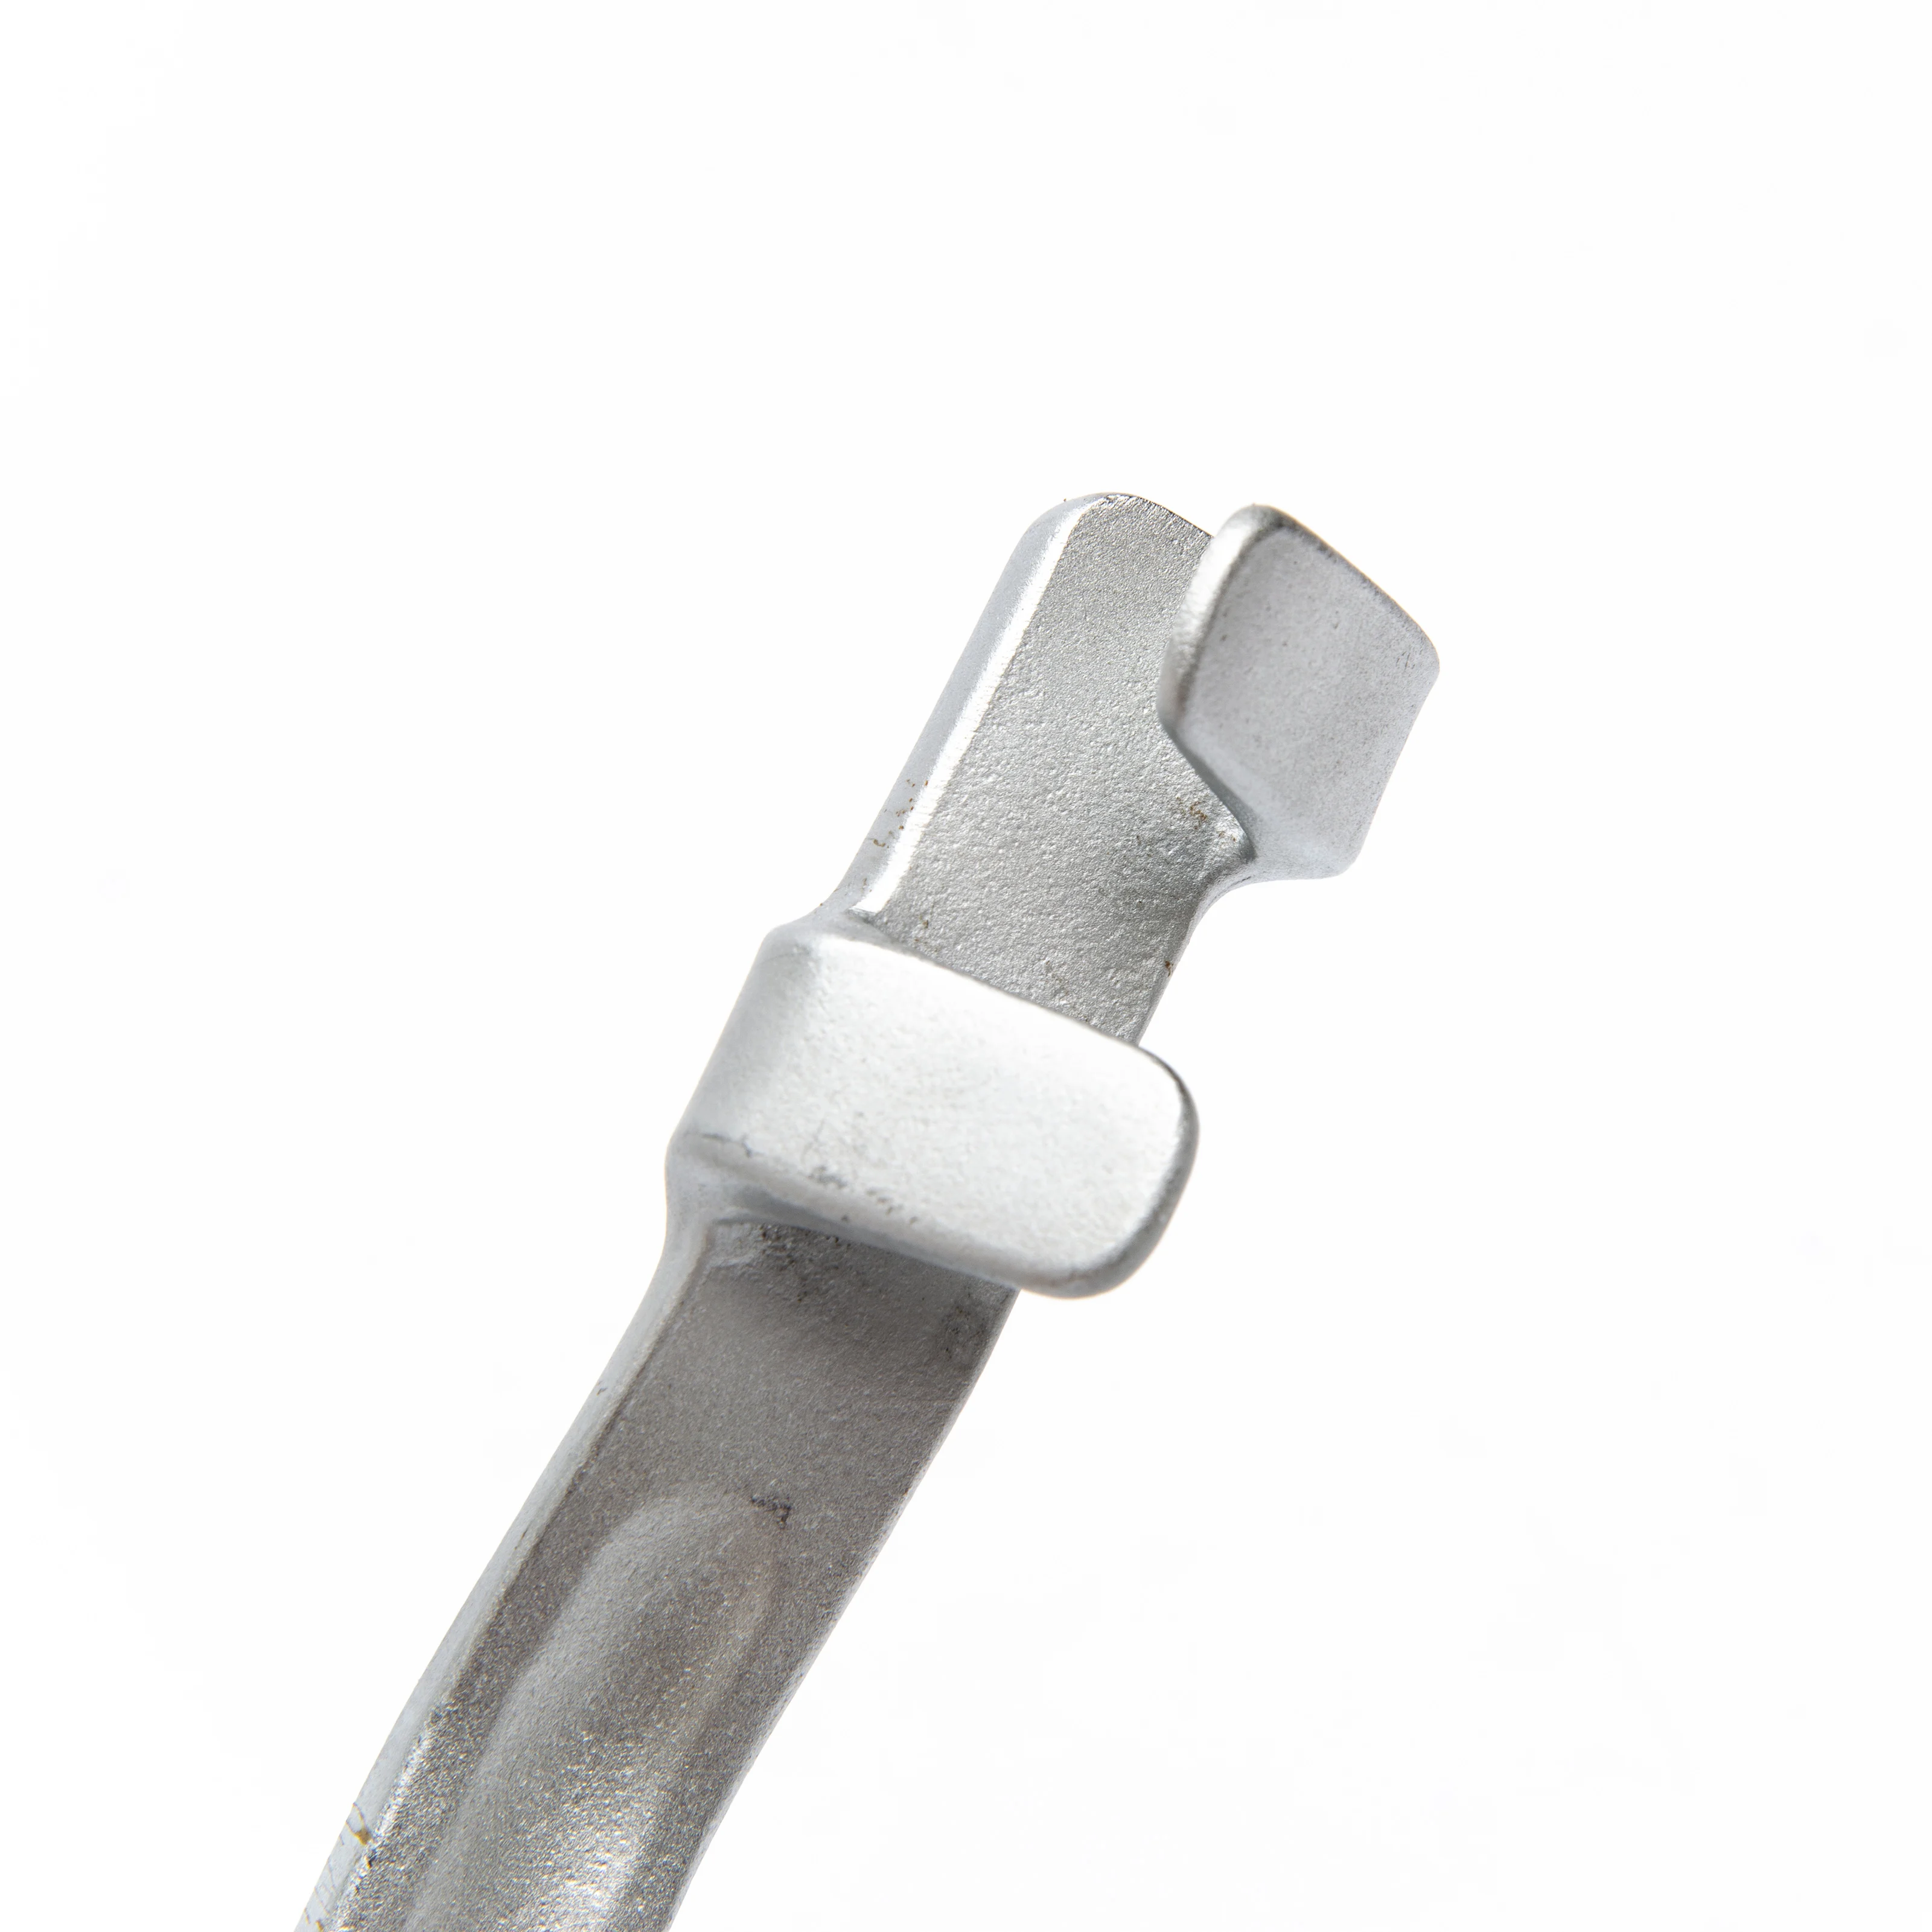 Universal wrench extender adaptor